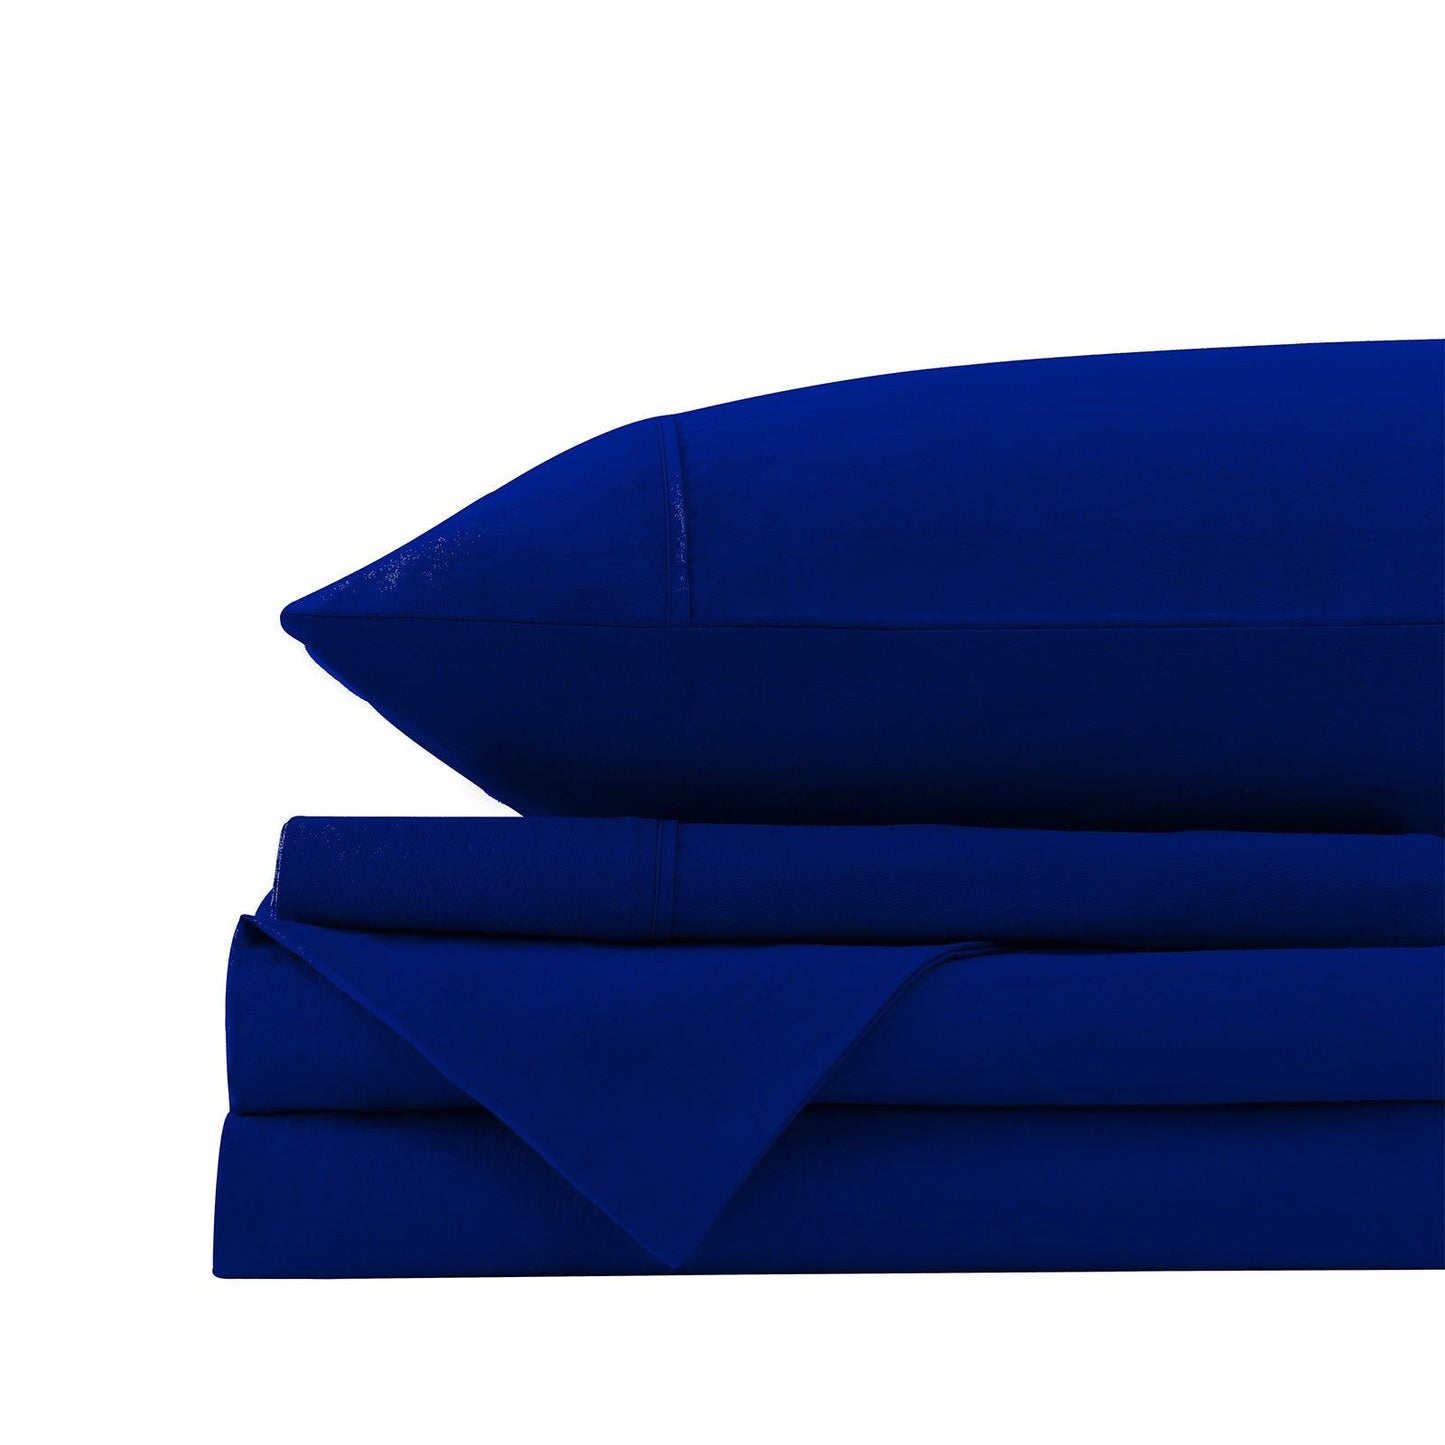 Royal Comfort Vintage Washed 100% Cotton Sheet Set Fitted Flat Sheet Pillowcases - Single - Royal Blue